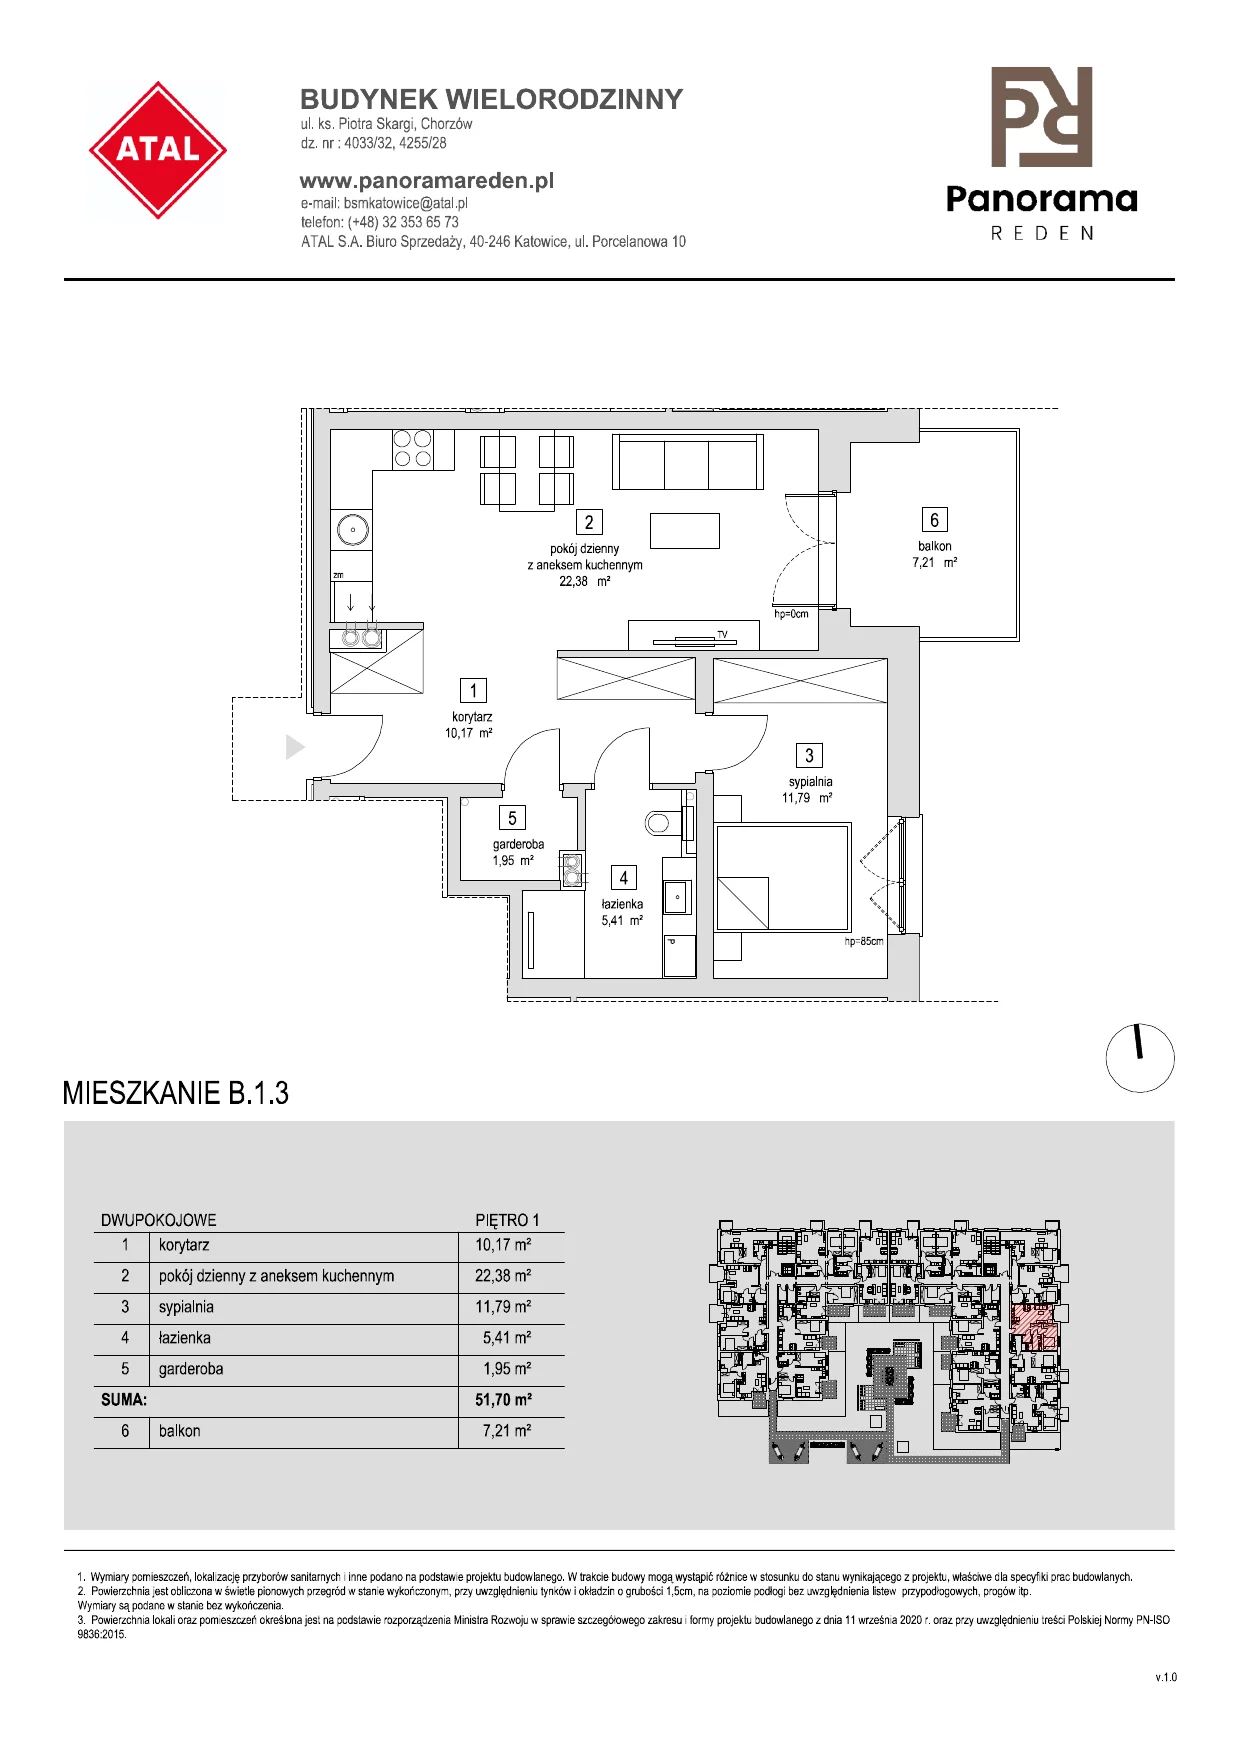 Mieszkanie 51,49 m², piętro 1, oferta nr B-1-M03, Panorama Reden, Chorzów, Centrum, Centrum, ul. Piotra Skargi